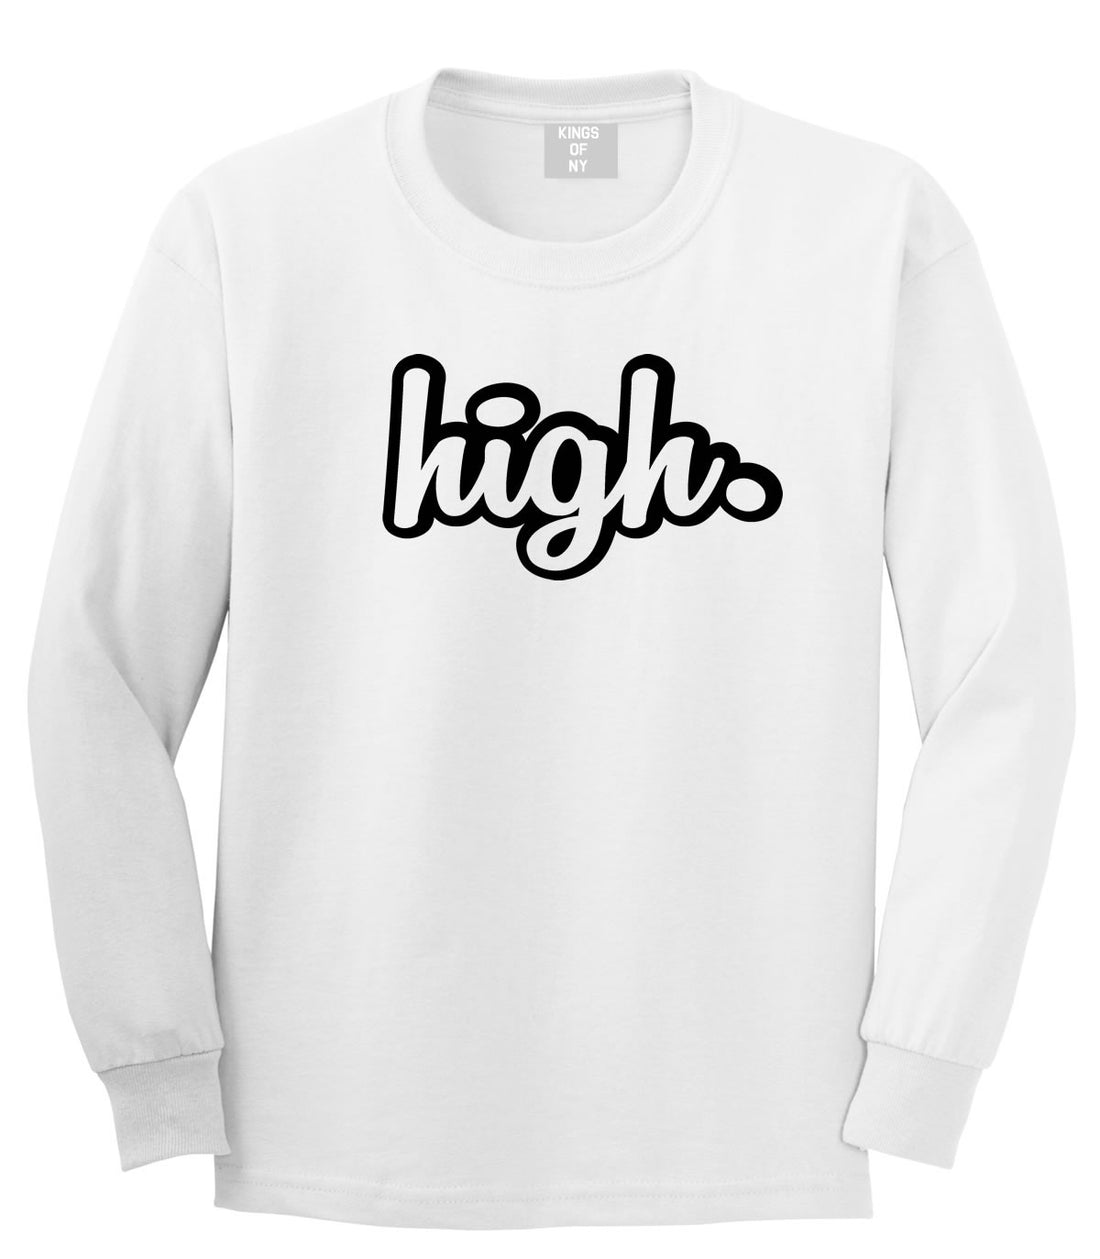 High Weed Faded Dap Smoke Marijuana Long Sleeve T-Shirt in White by Kings Of NY